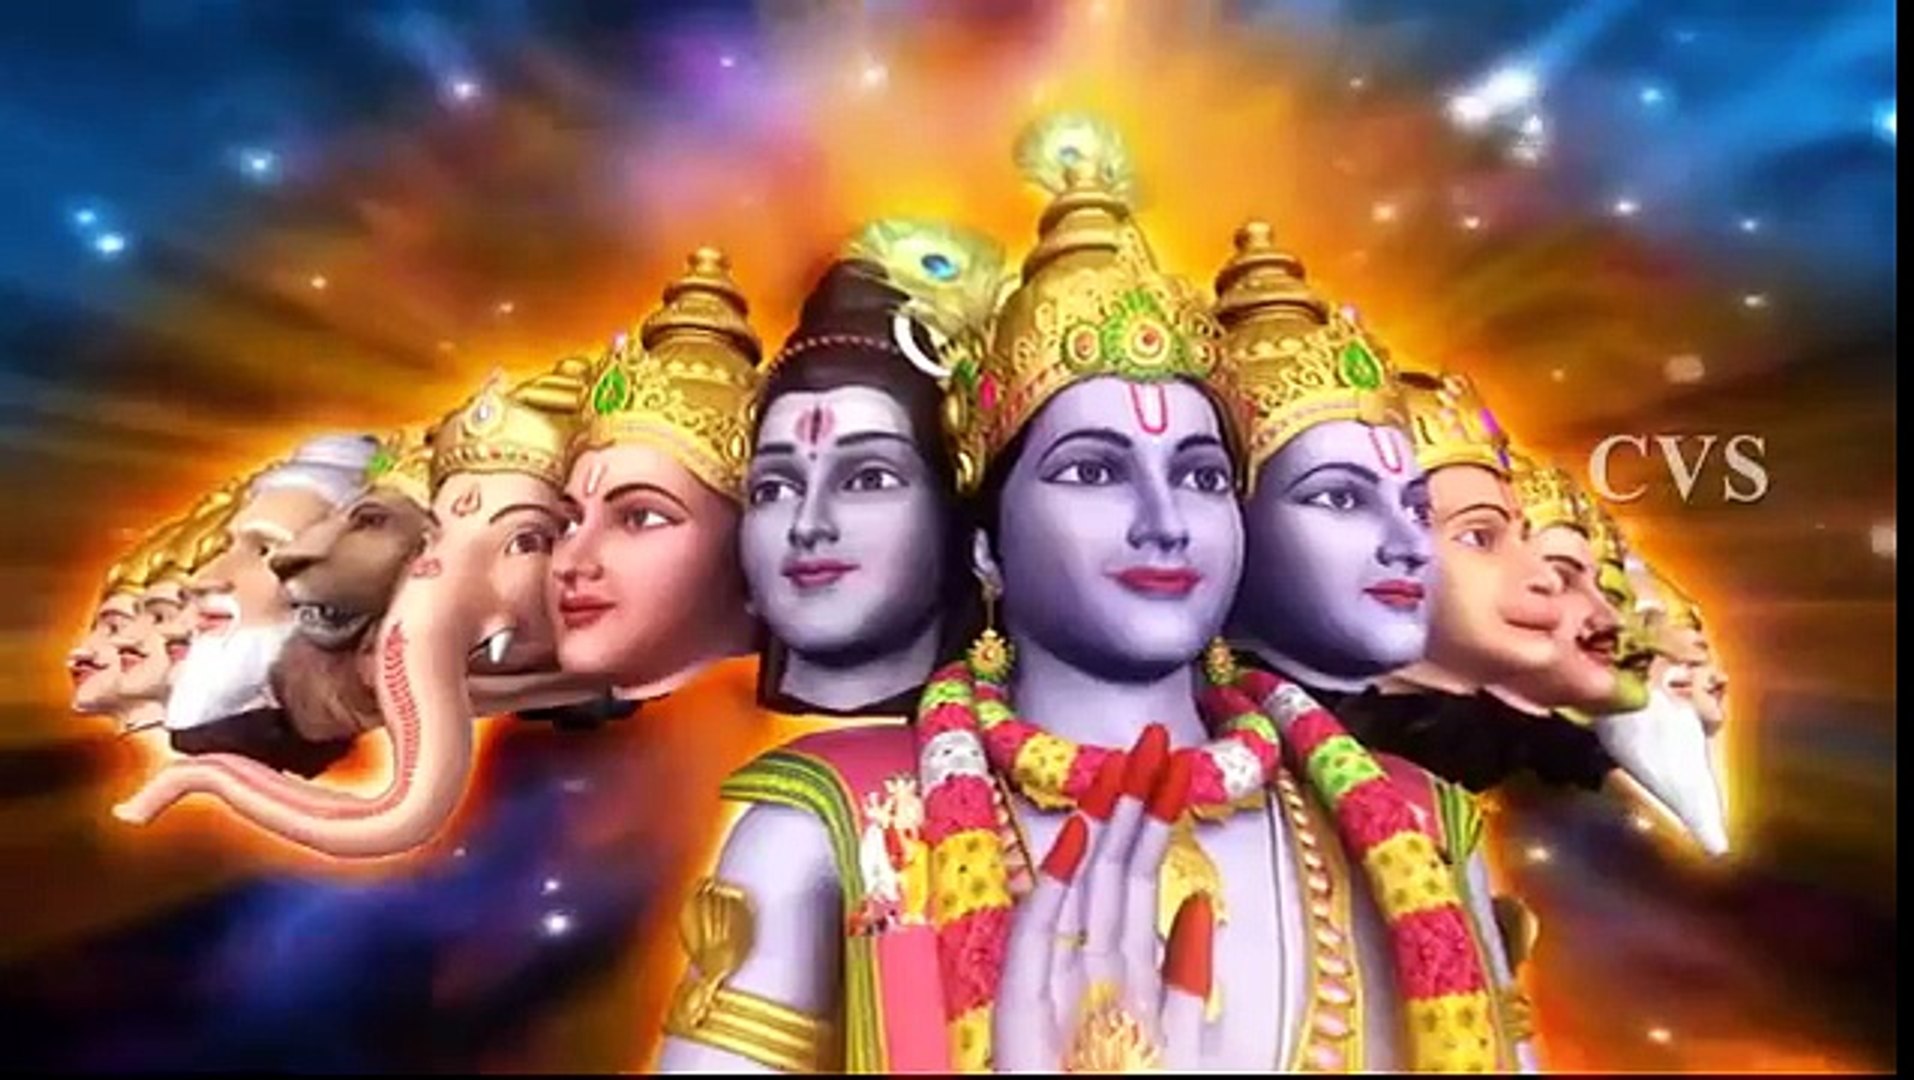 Hare Rama Hare Krishna god songs 2 - 3D Animation Video hare Krishna hare  Rama bhajan songs - video Dailymotion